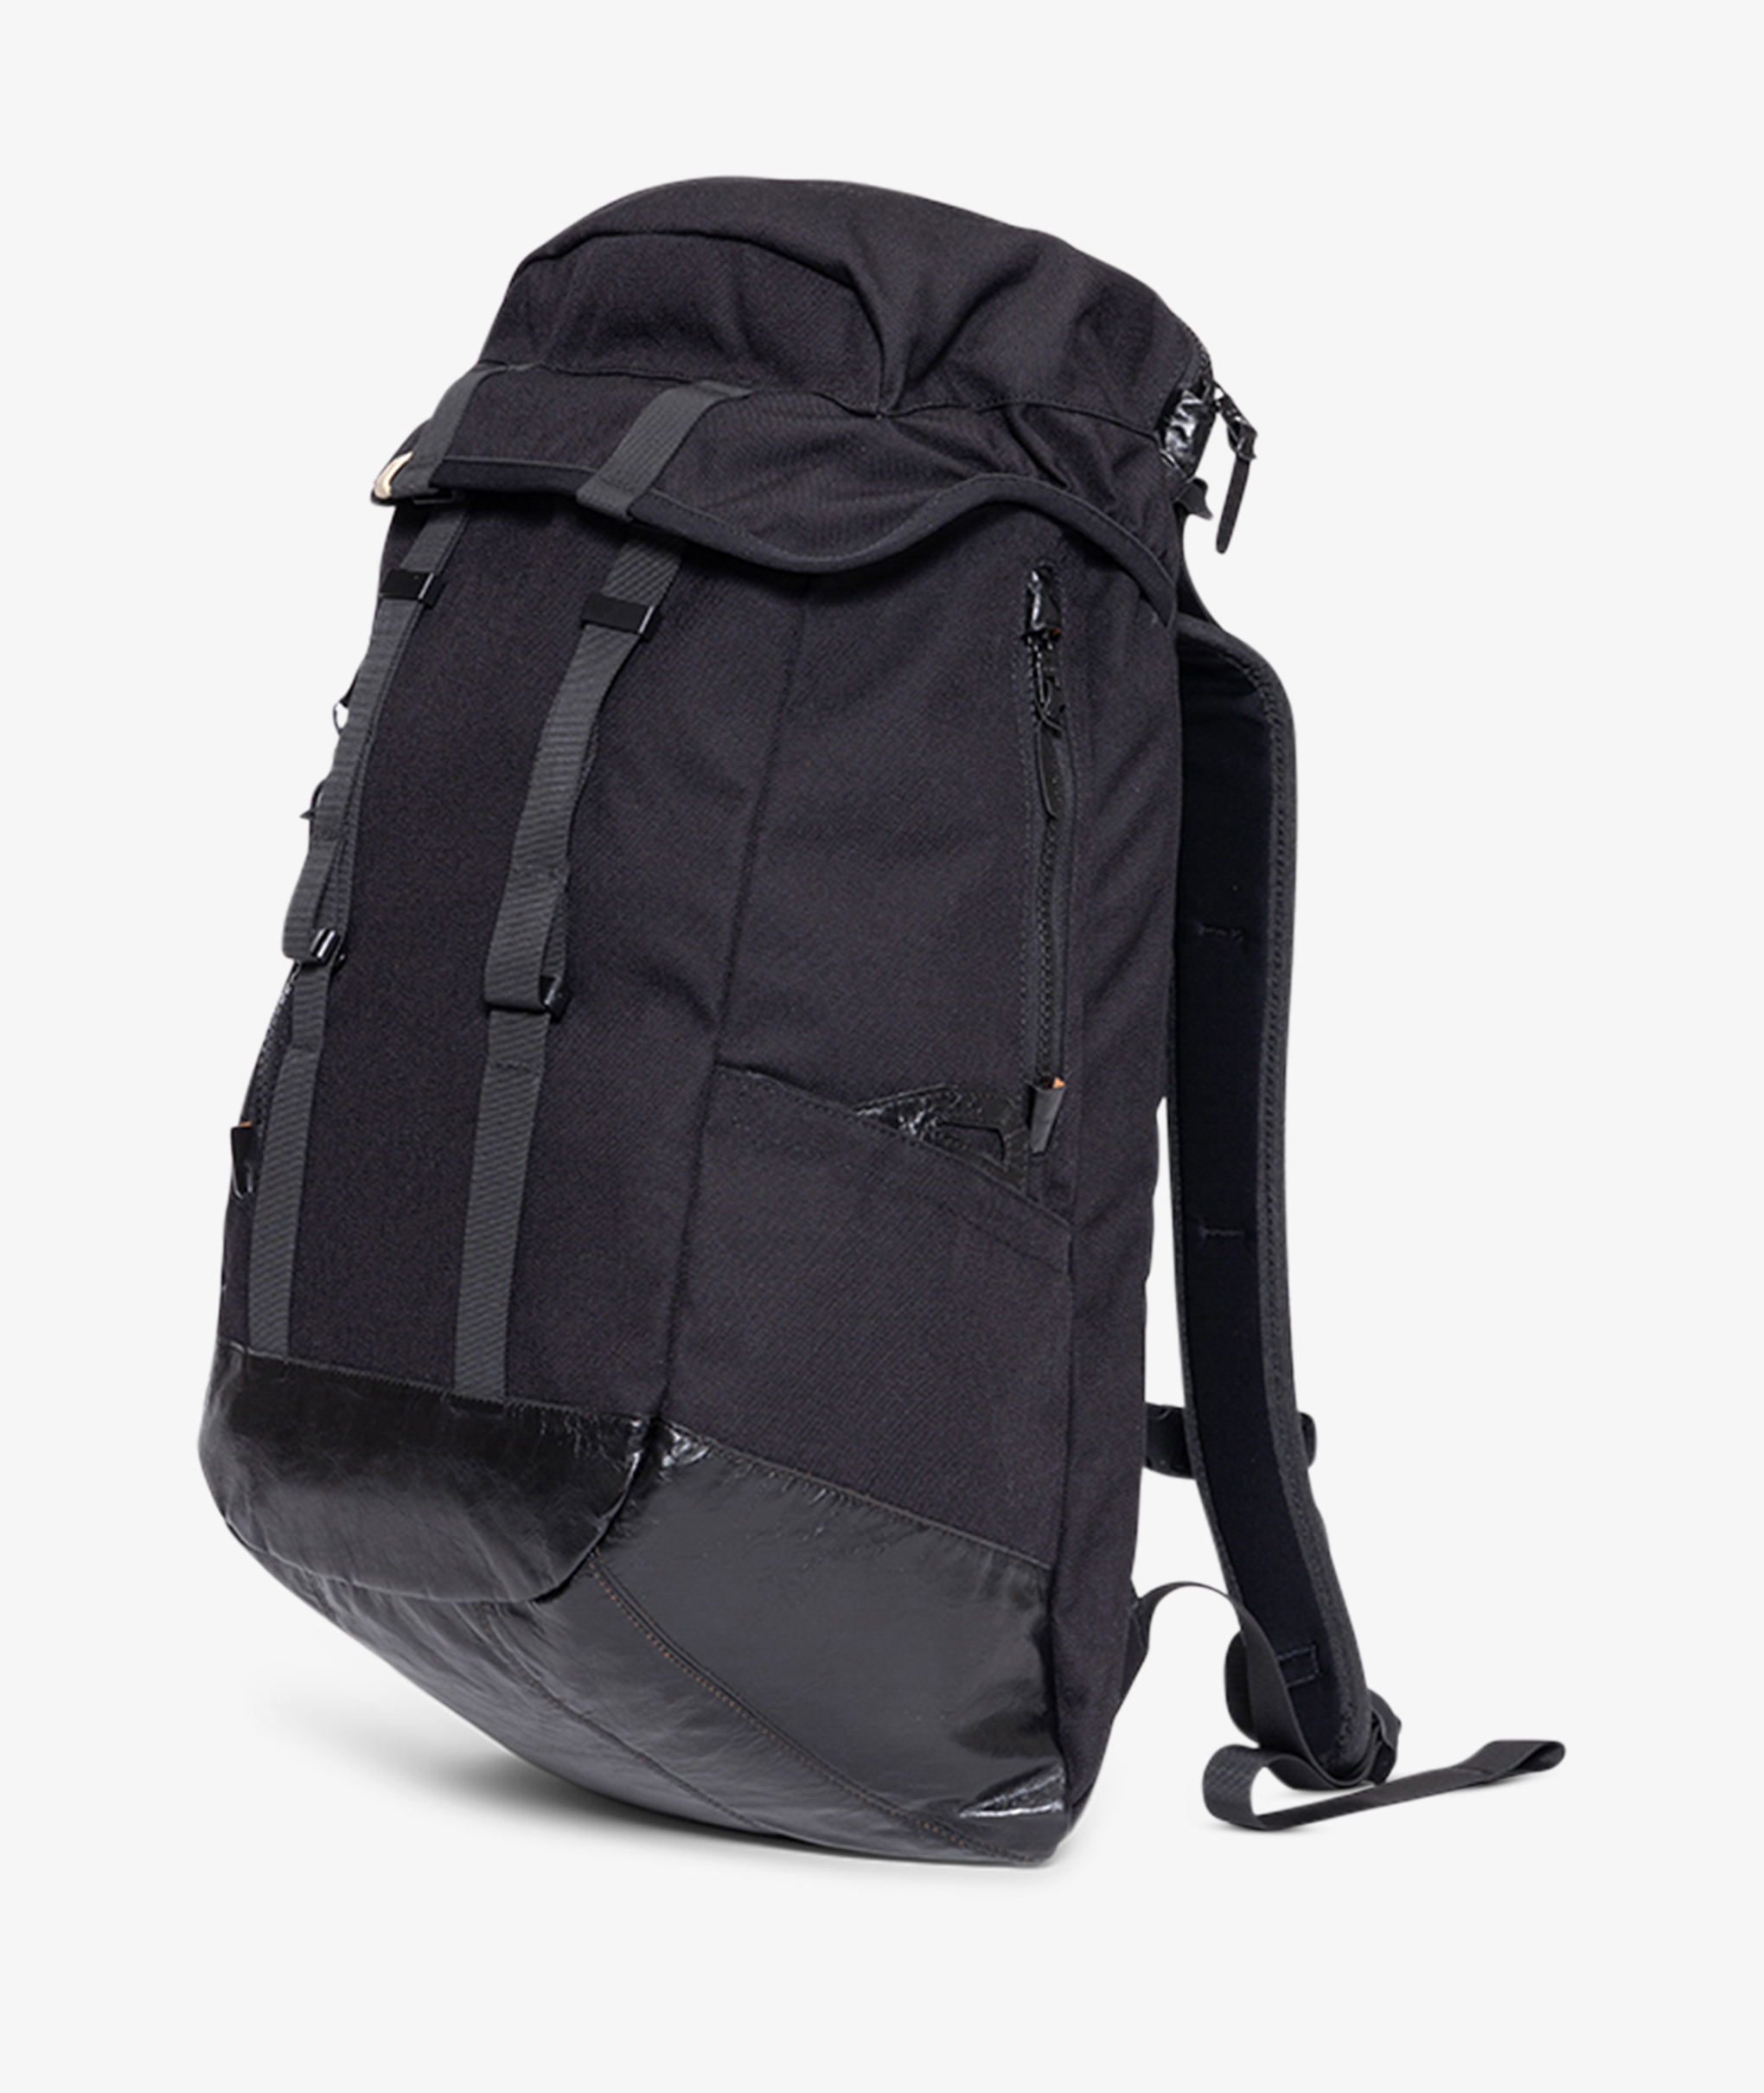 Norse Store | Shipping Worldwide - Visvim Cordura 25L Backpack - Black